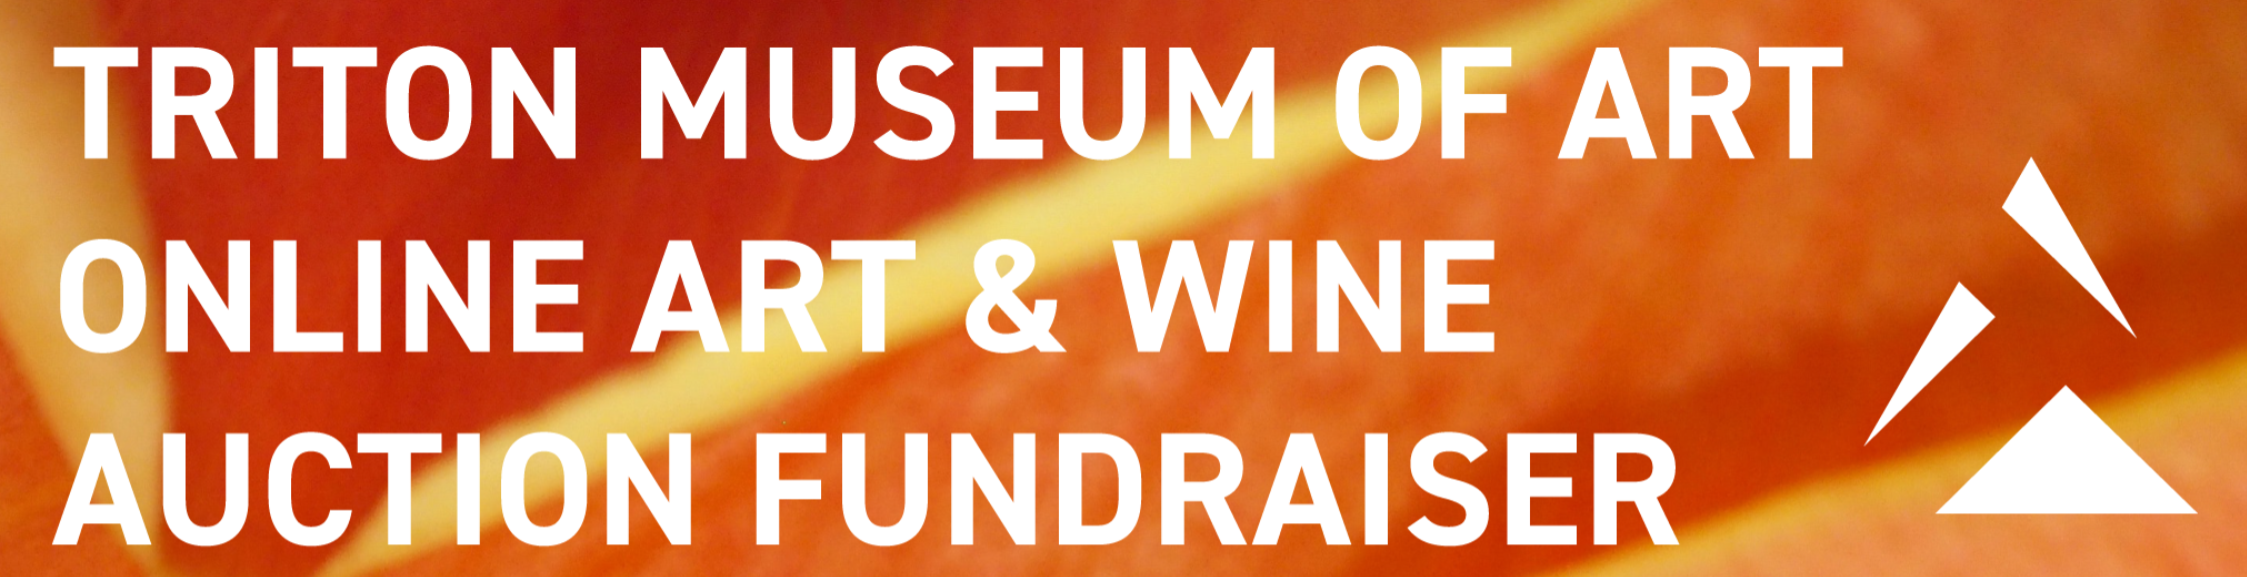 Triton Museum of Art Online Art and Wine Auction Fundraiser, Santa Clara, California, United States